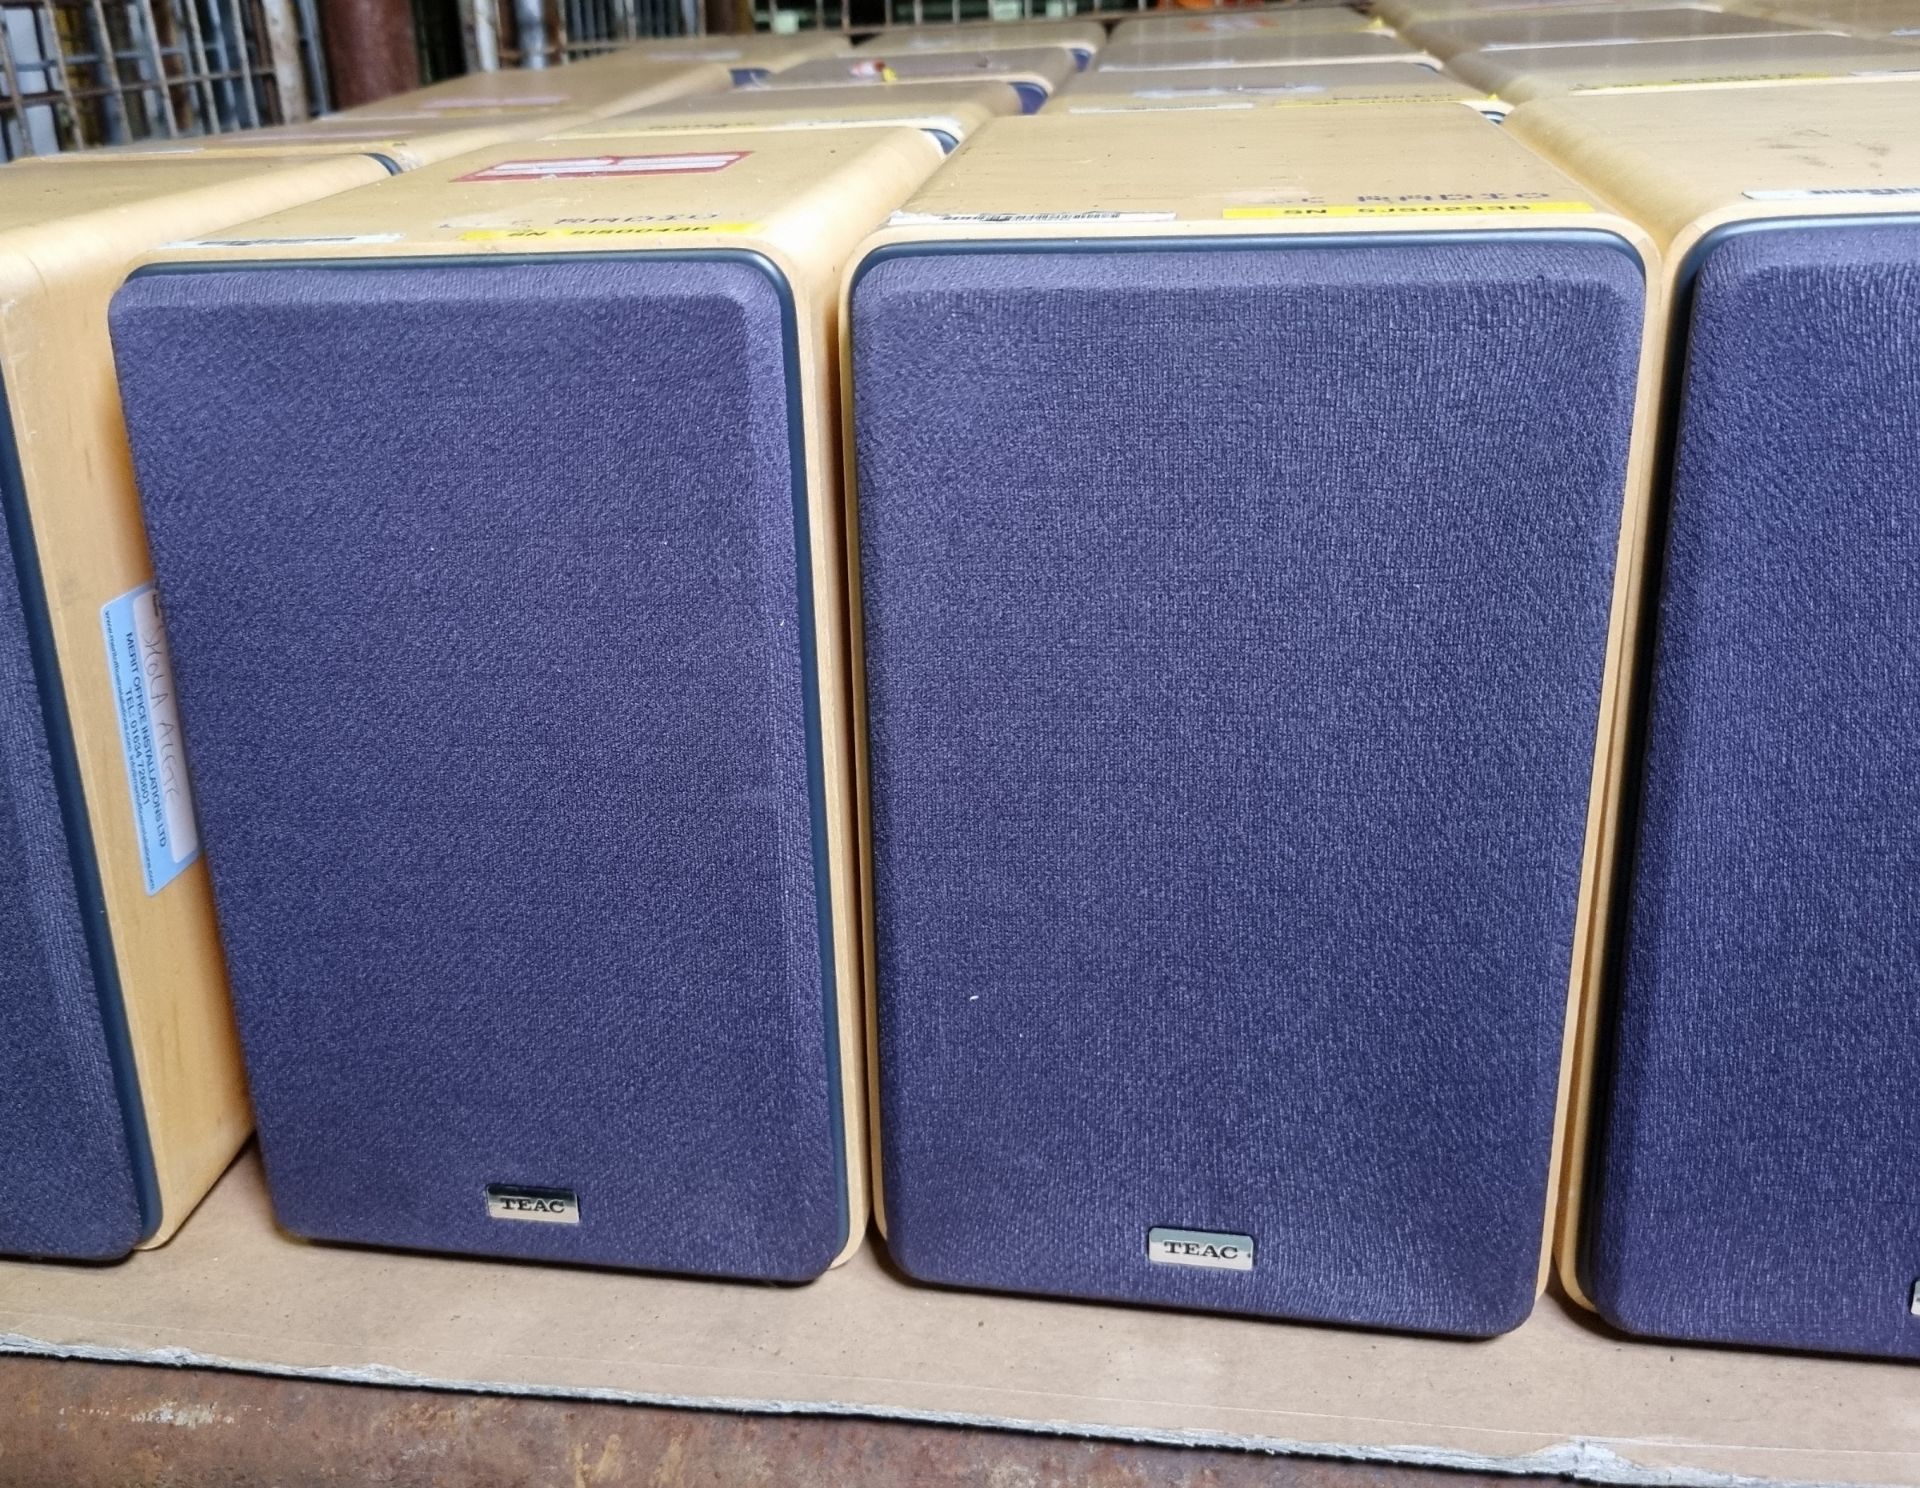 20x TEAC LS-H255 2-Way speakers - 100W - Image 5 of 5